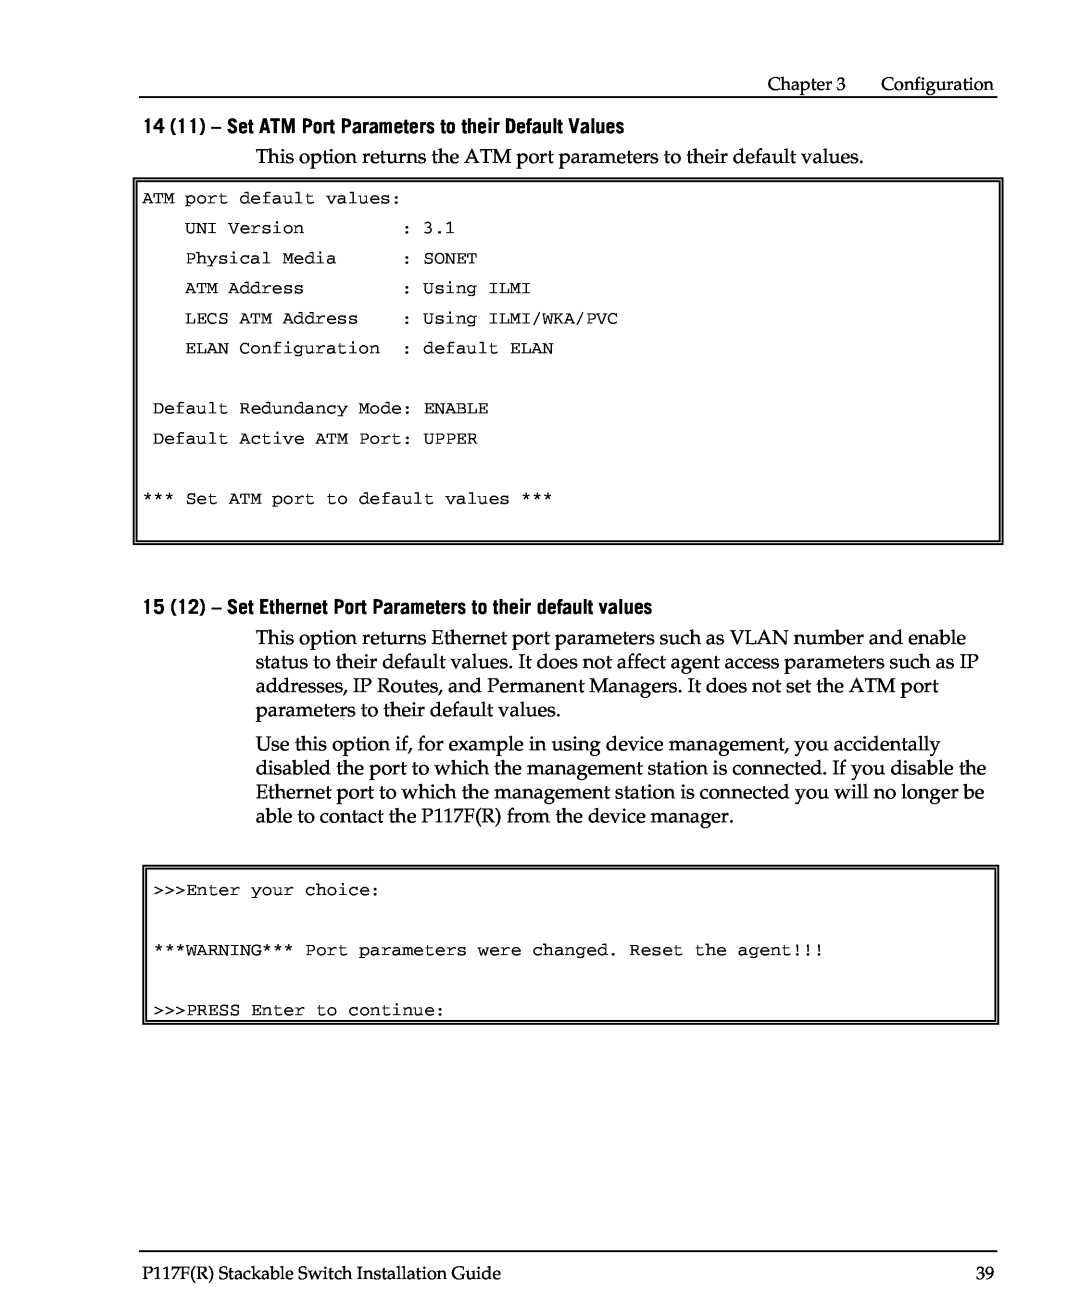 Avaya P117F(R) manual 14 11 - Set ATM Port Parameters to their Default Values 